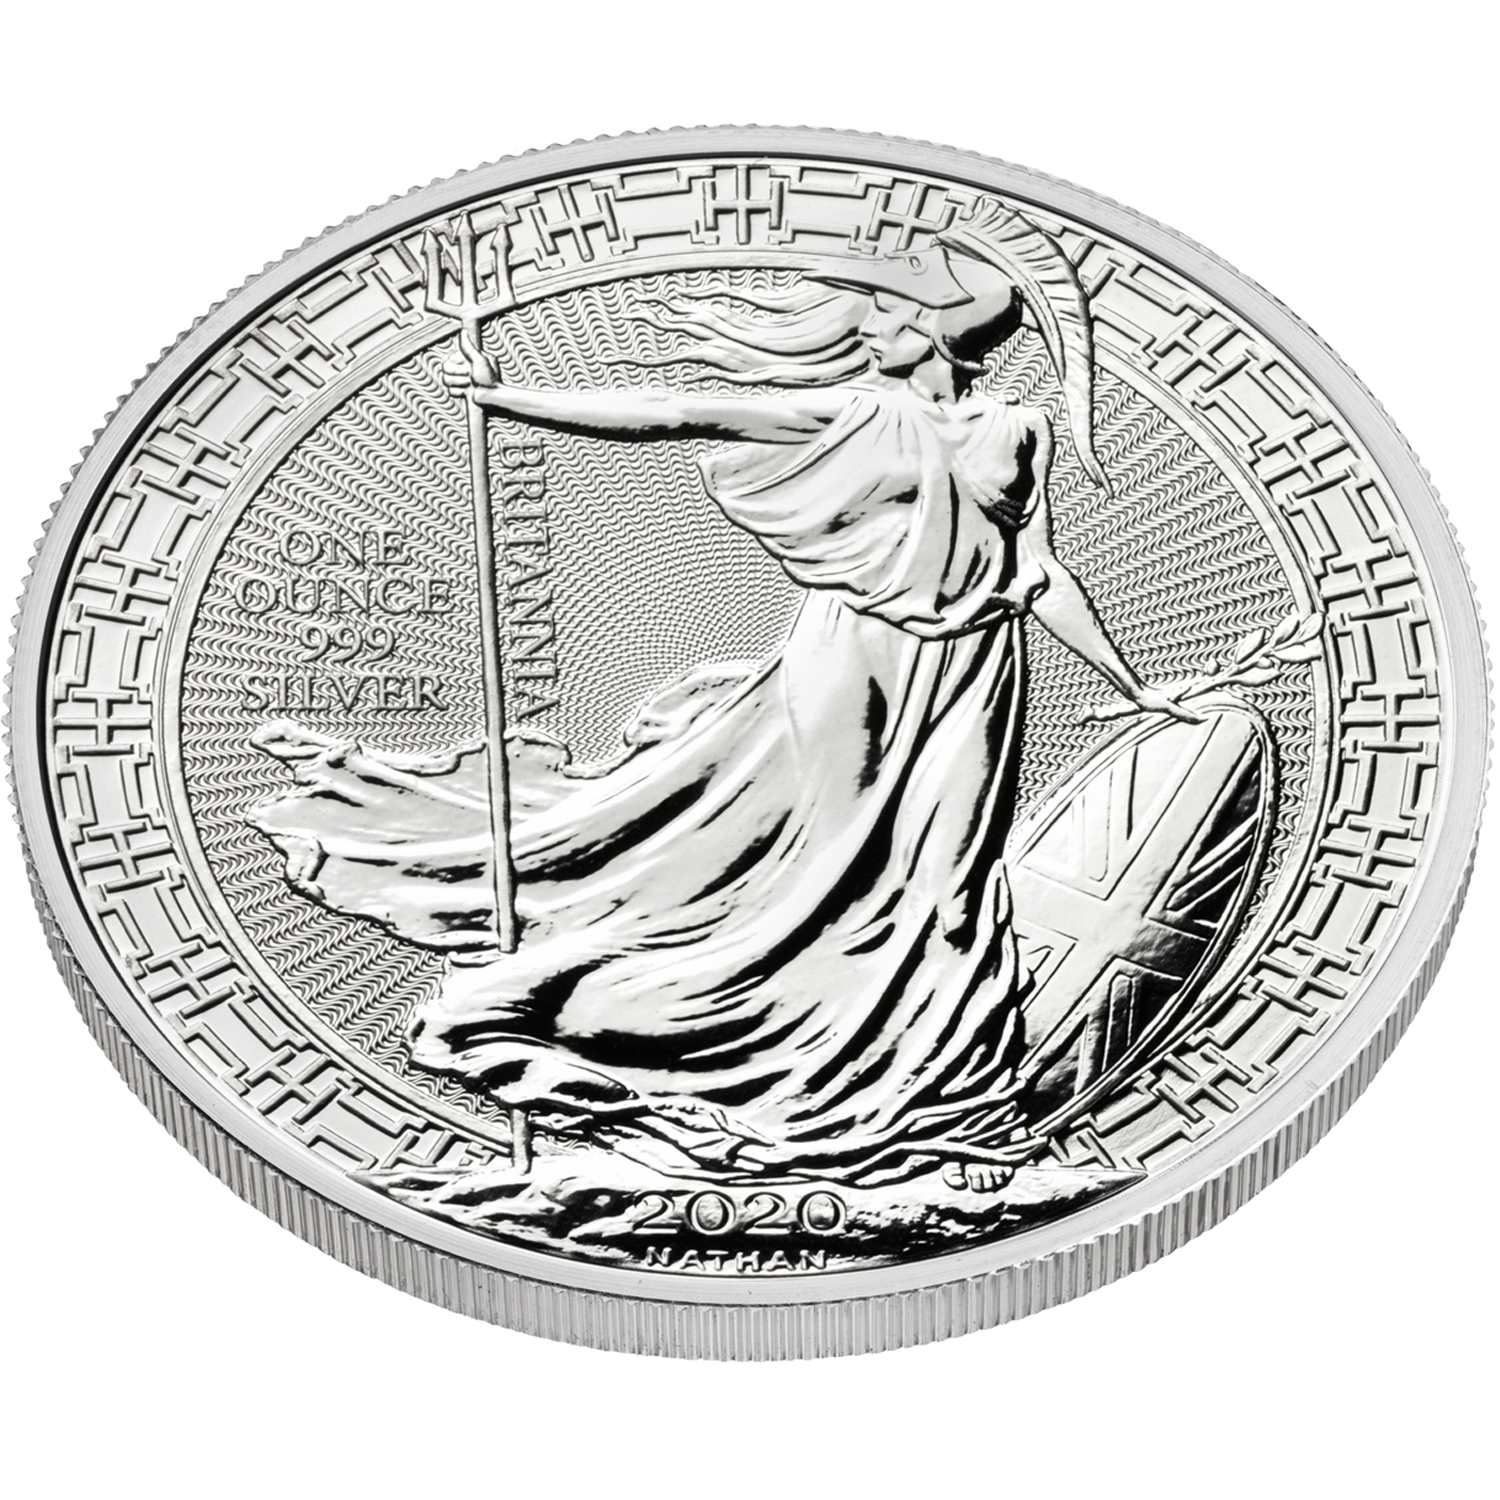 Roll of 20 2019 Britain 1 oz Silver Britannia Oriental Border £2 Coins SKU56996 